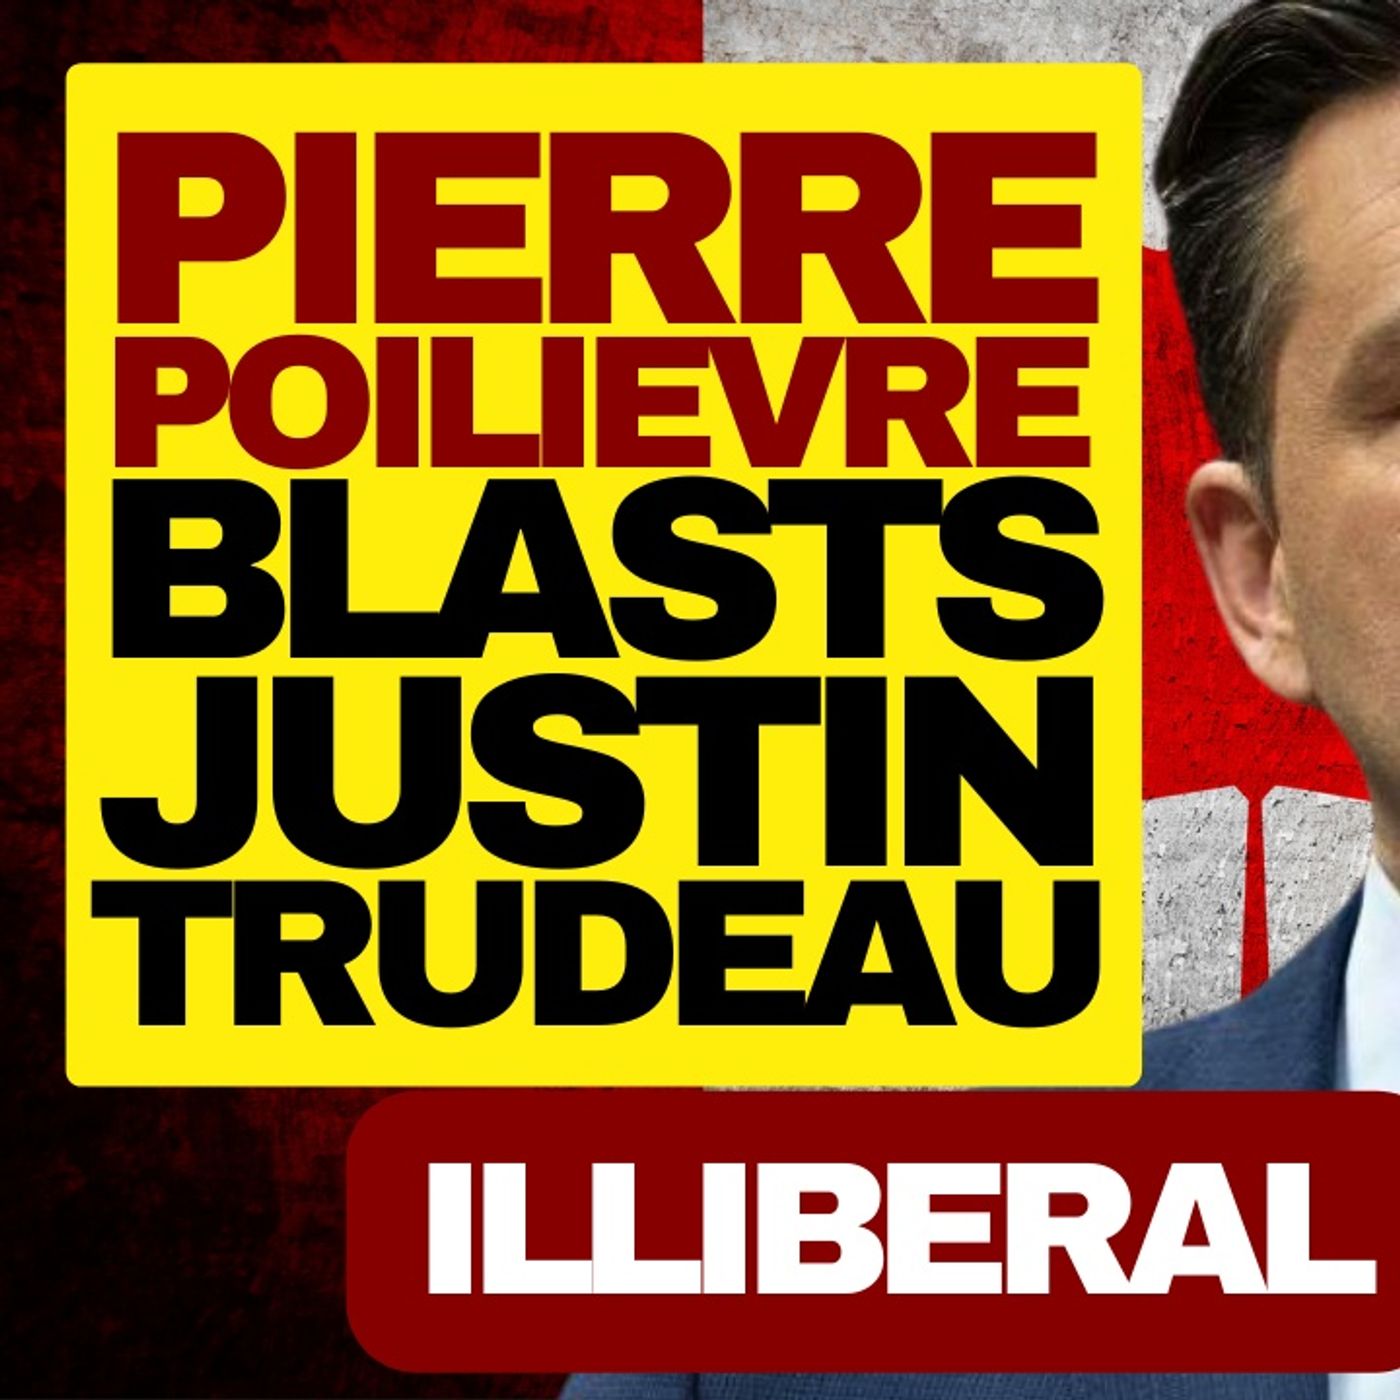 Pierre Poilievre Blasts Trudeau, Calls Him Illiberal